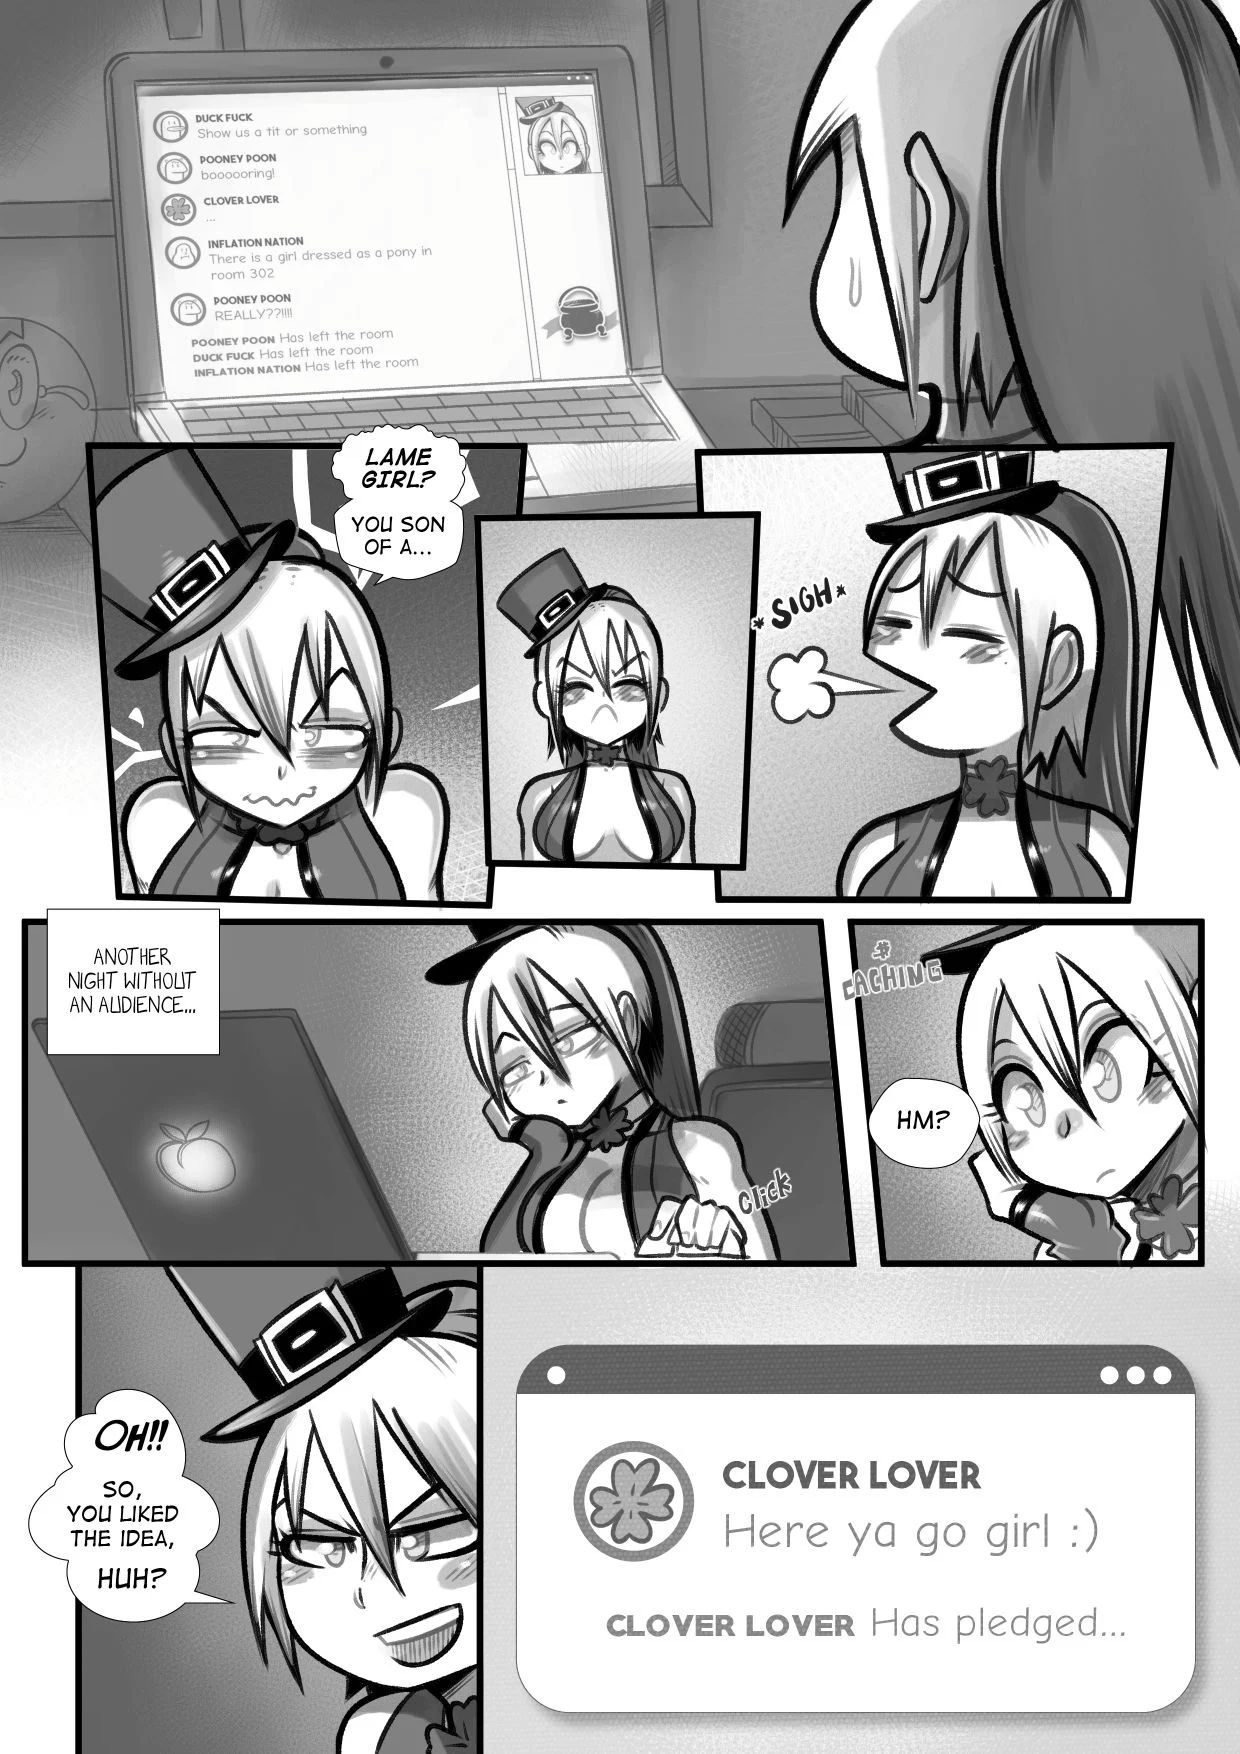 CLover Loverss Hentai english 03